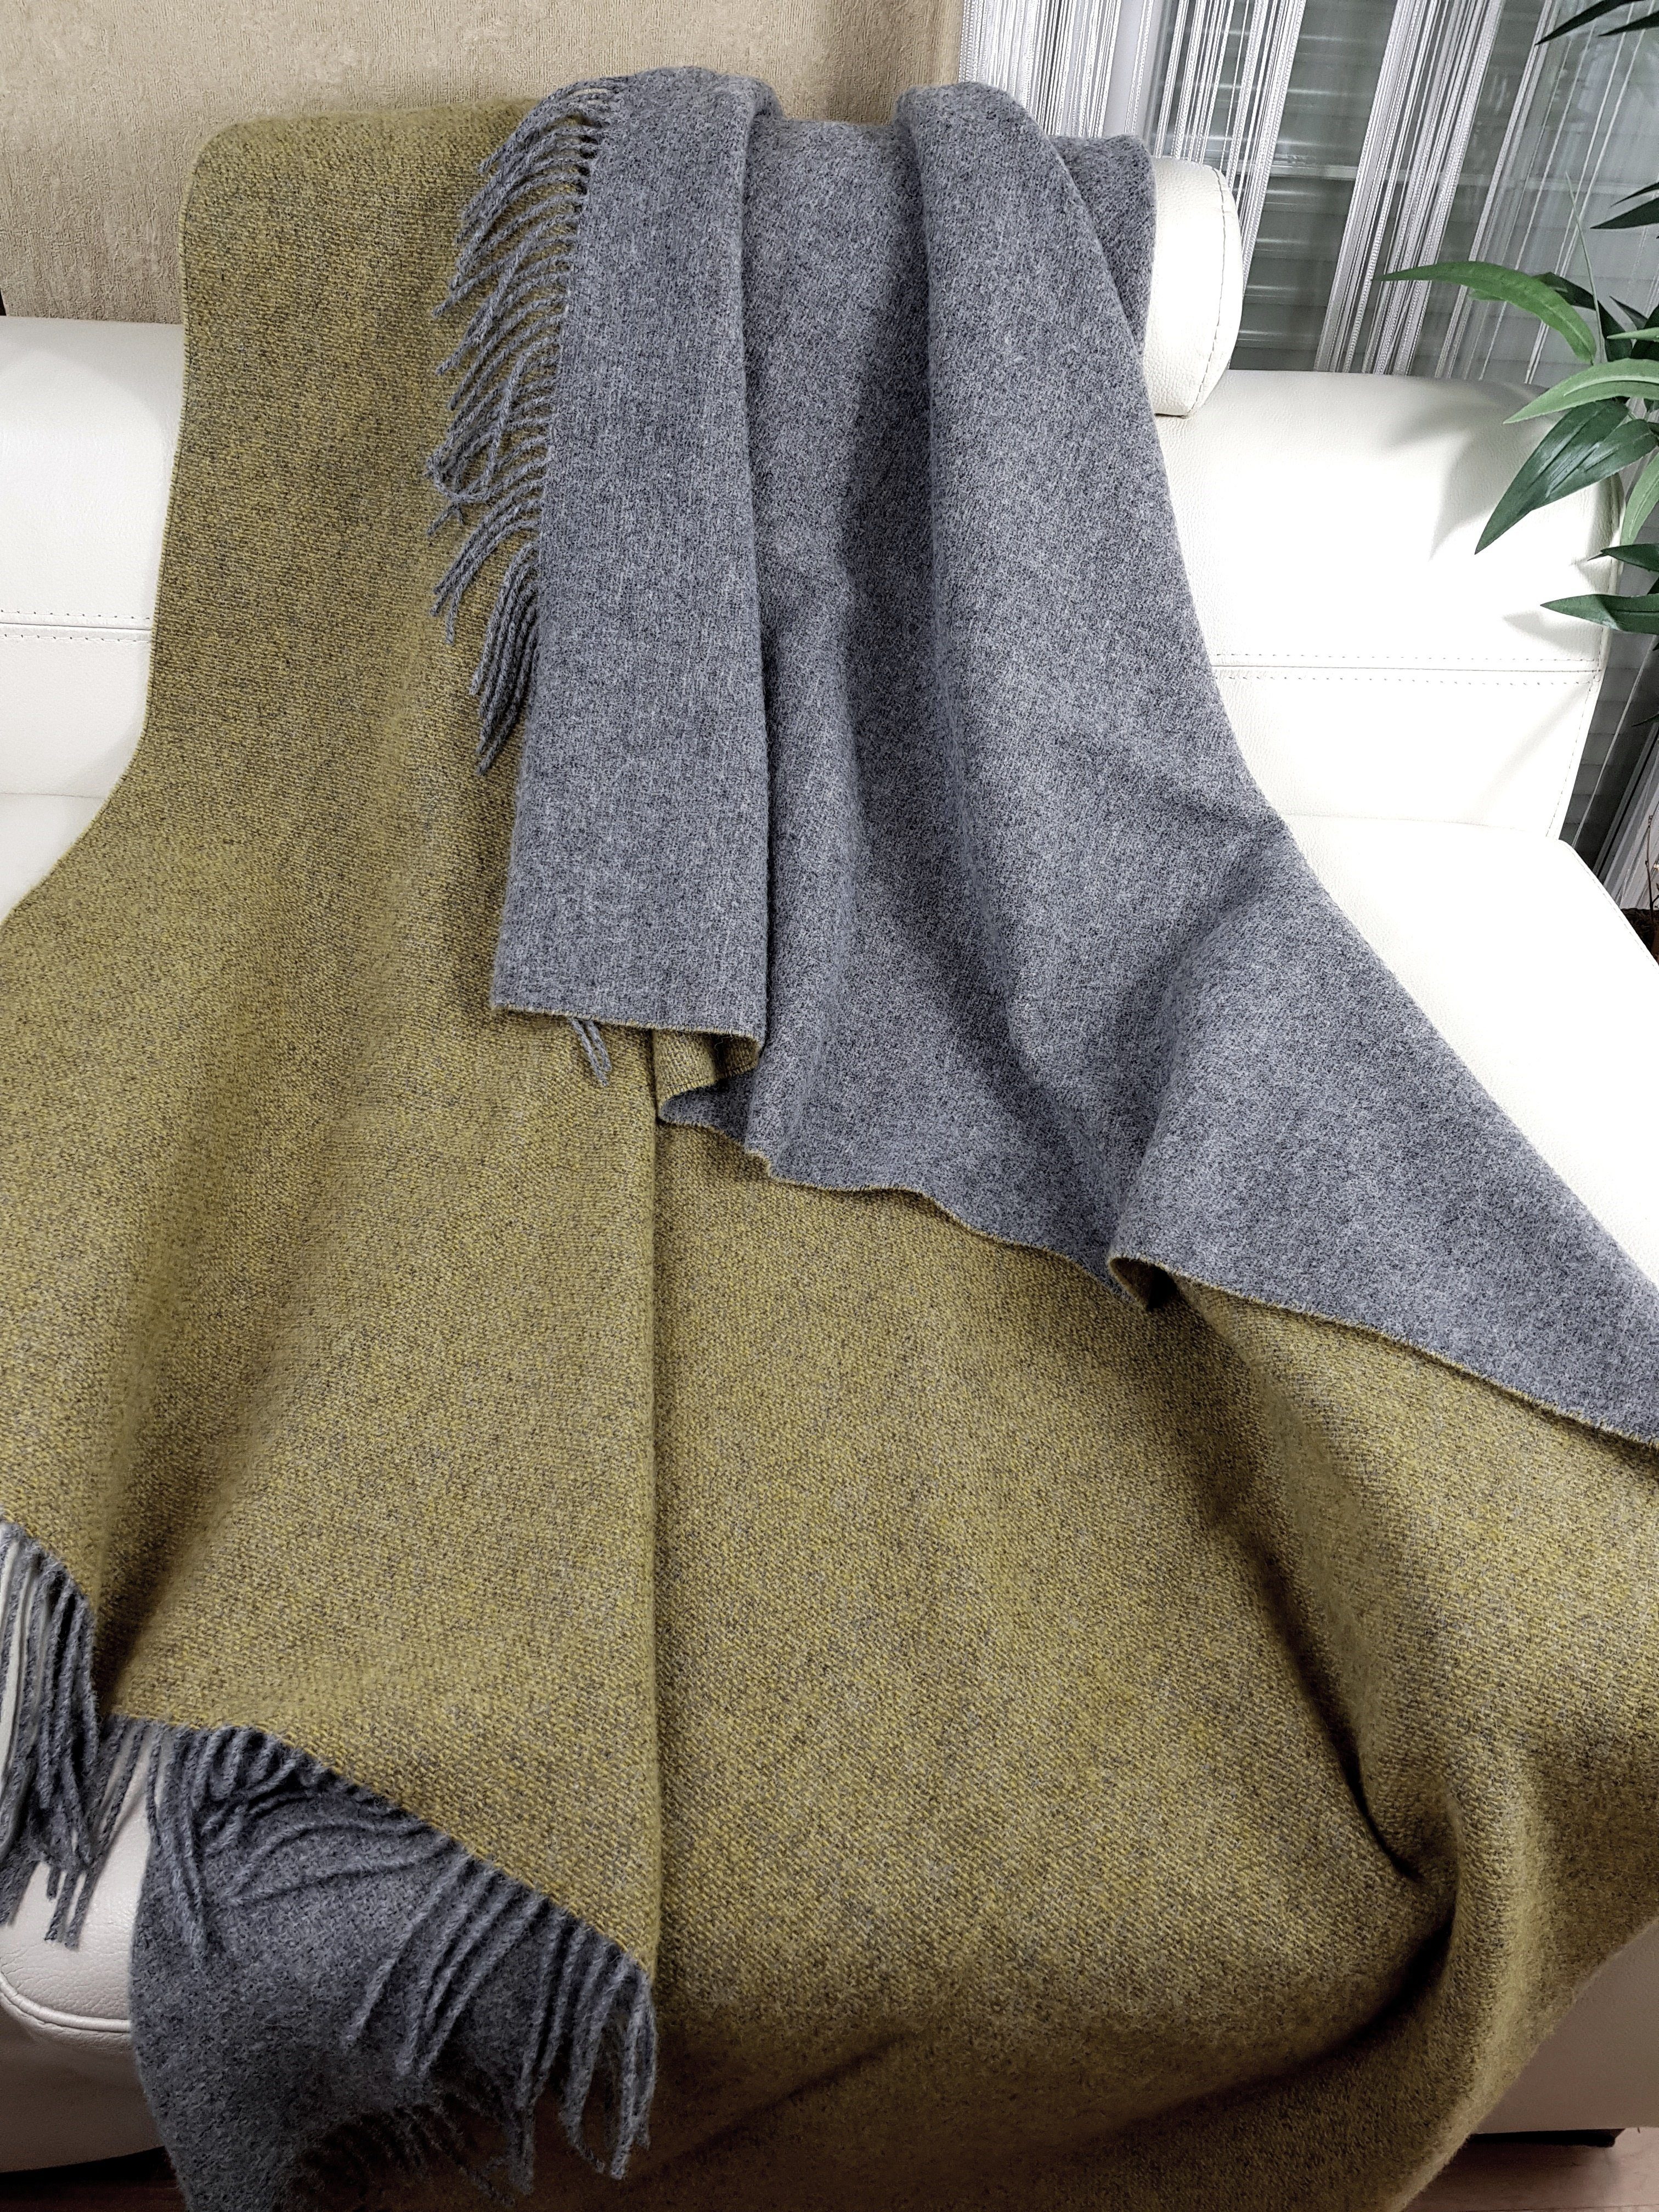 TIROL Wolldecke Grau-Gelb 100% Schurwolle, aus (doubleface) STTS Wolldecke